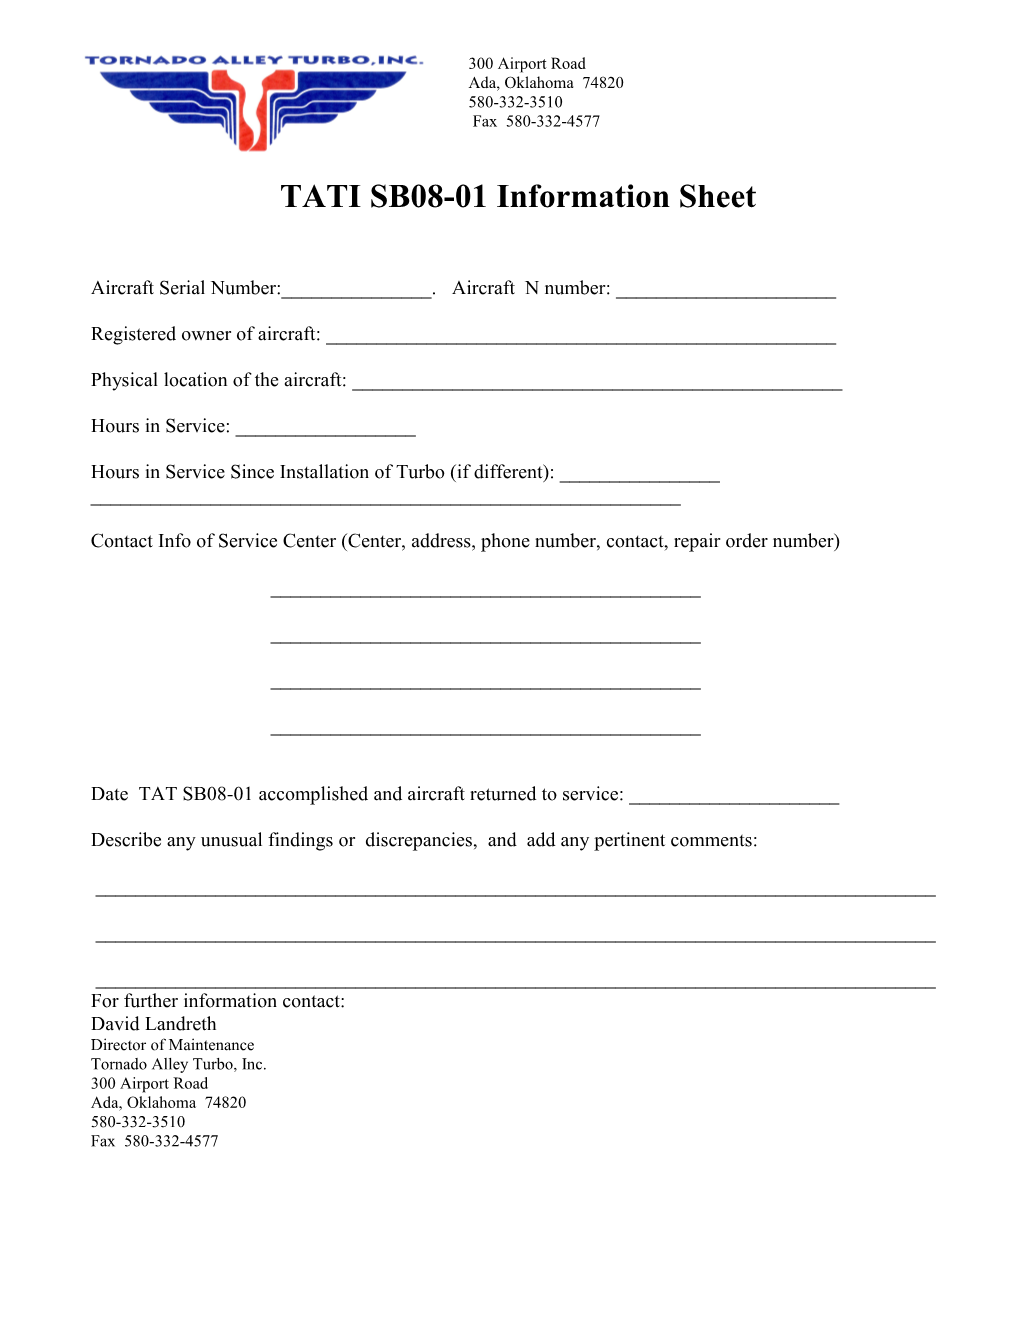 TATI SB08-01 Information Sheet